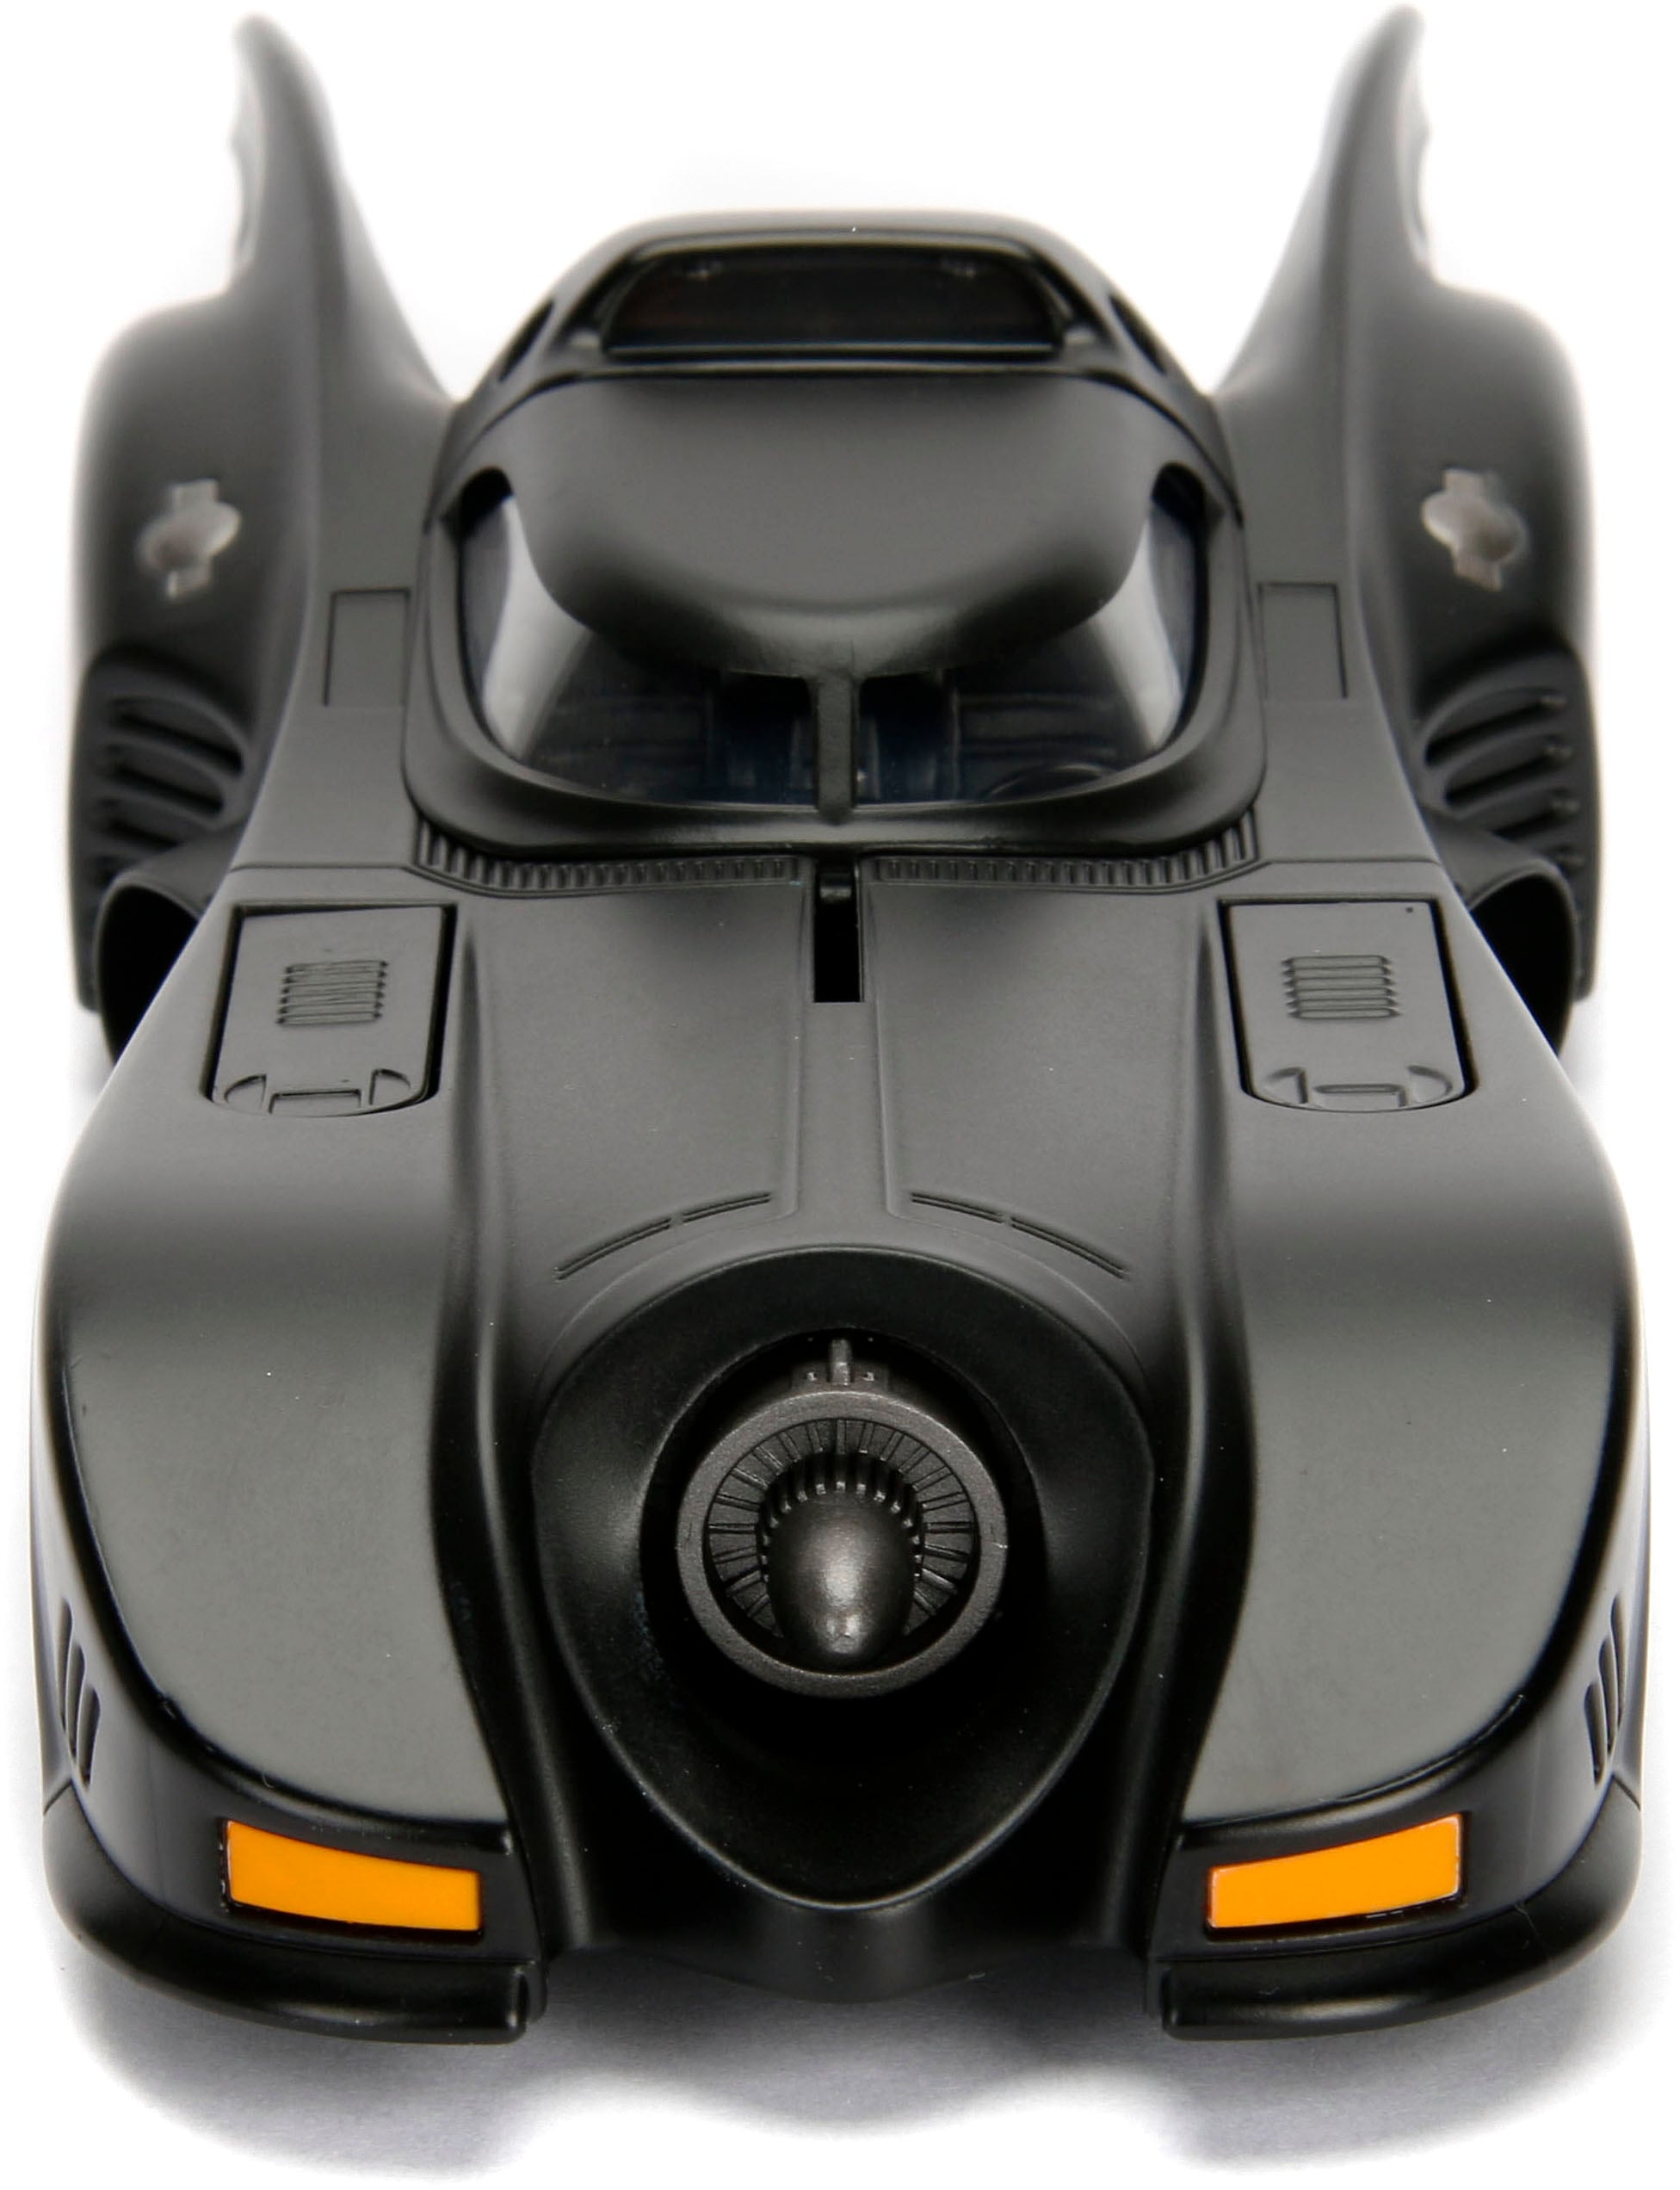 JADA Spielzeug-Auto »Batman 1989 Batmobil« bei